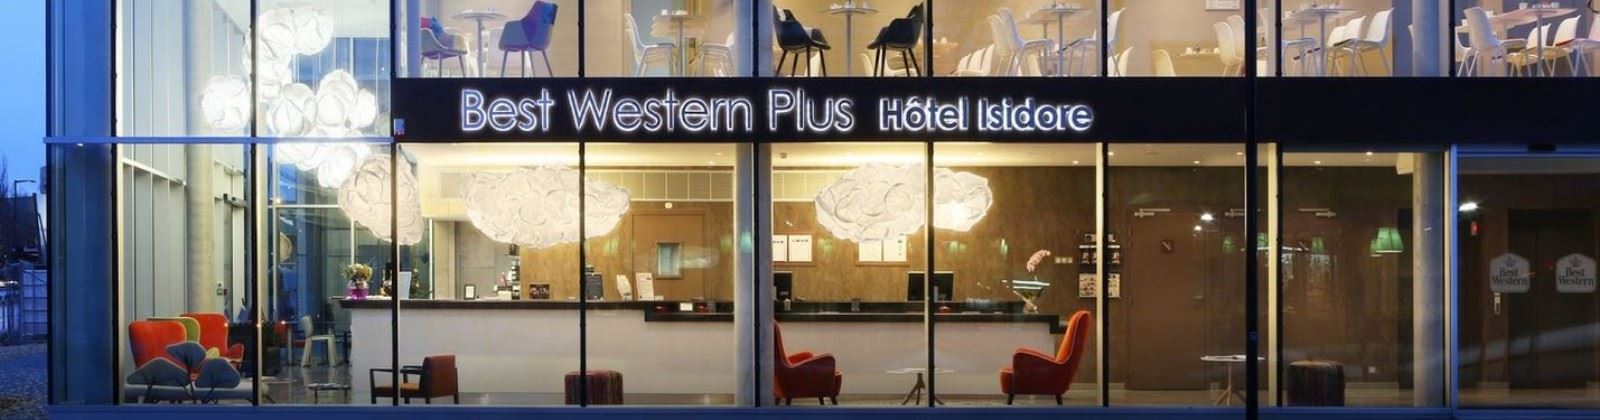 OLEVENE image - best-western-plus-hotel-isidore-olevene-restaurant-seminaires-meeting-booking-